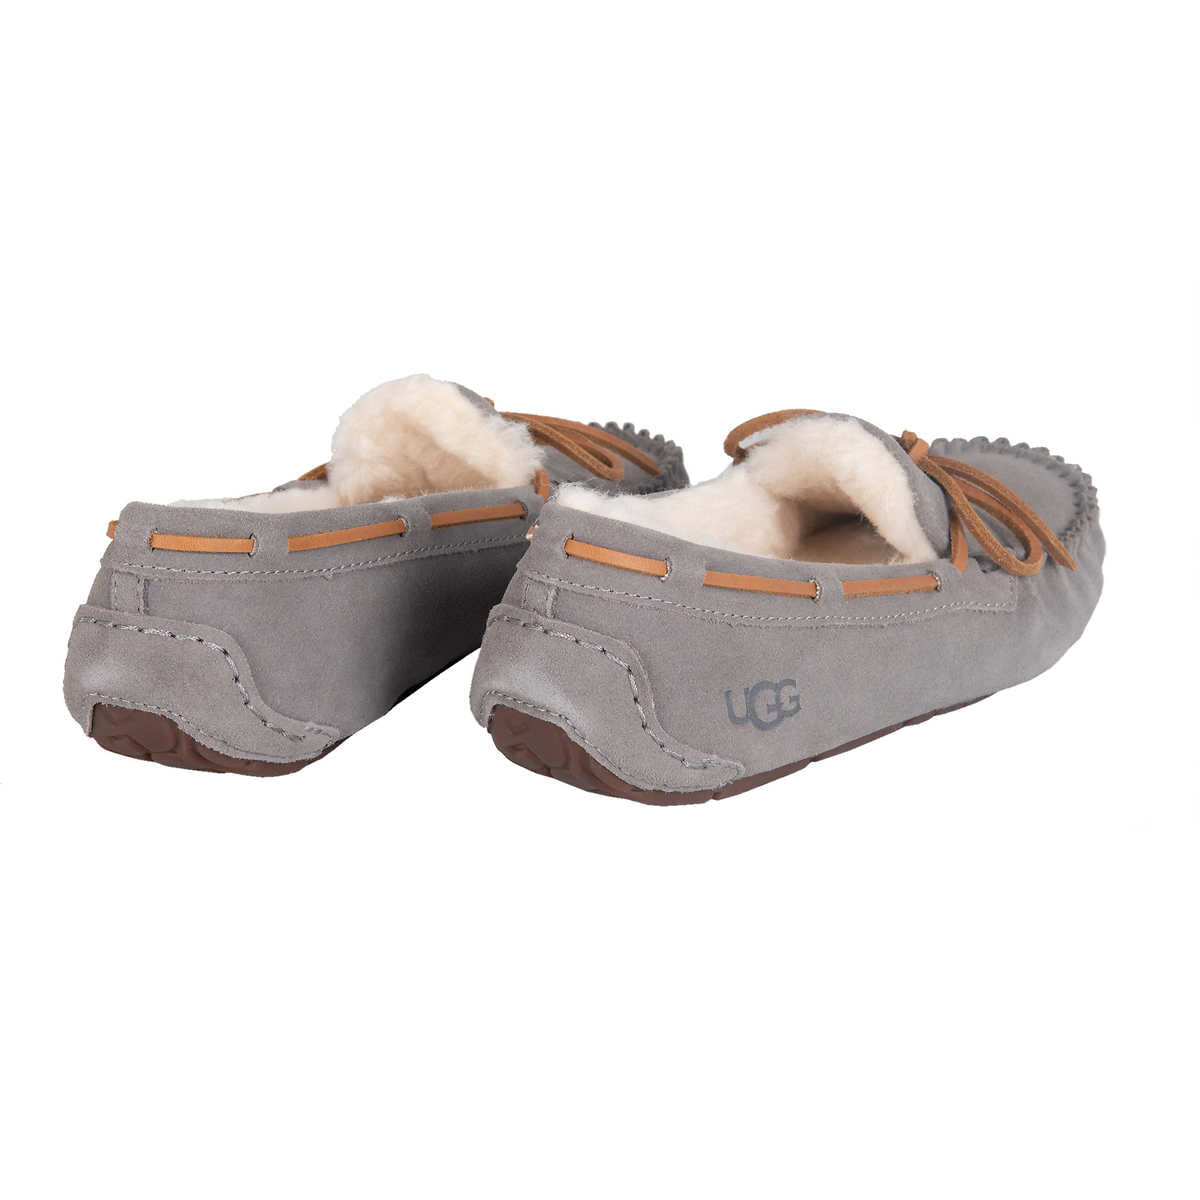 ugg-pantoufles-dakota-femme-women's-slippers-3